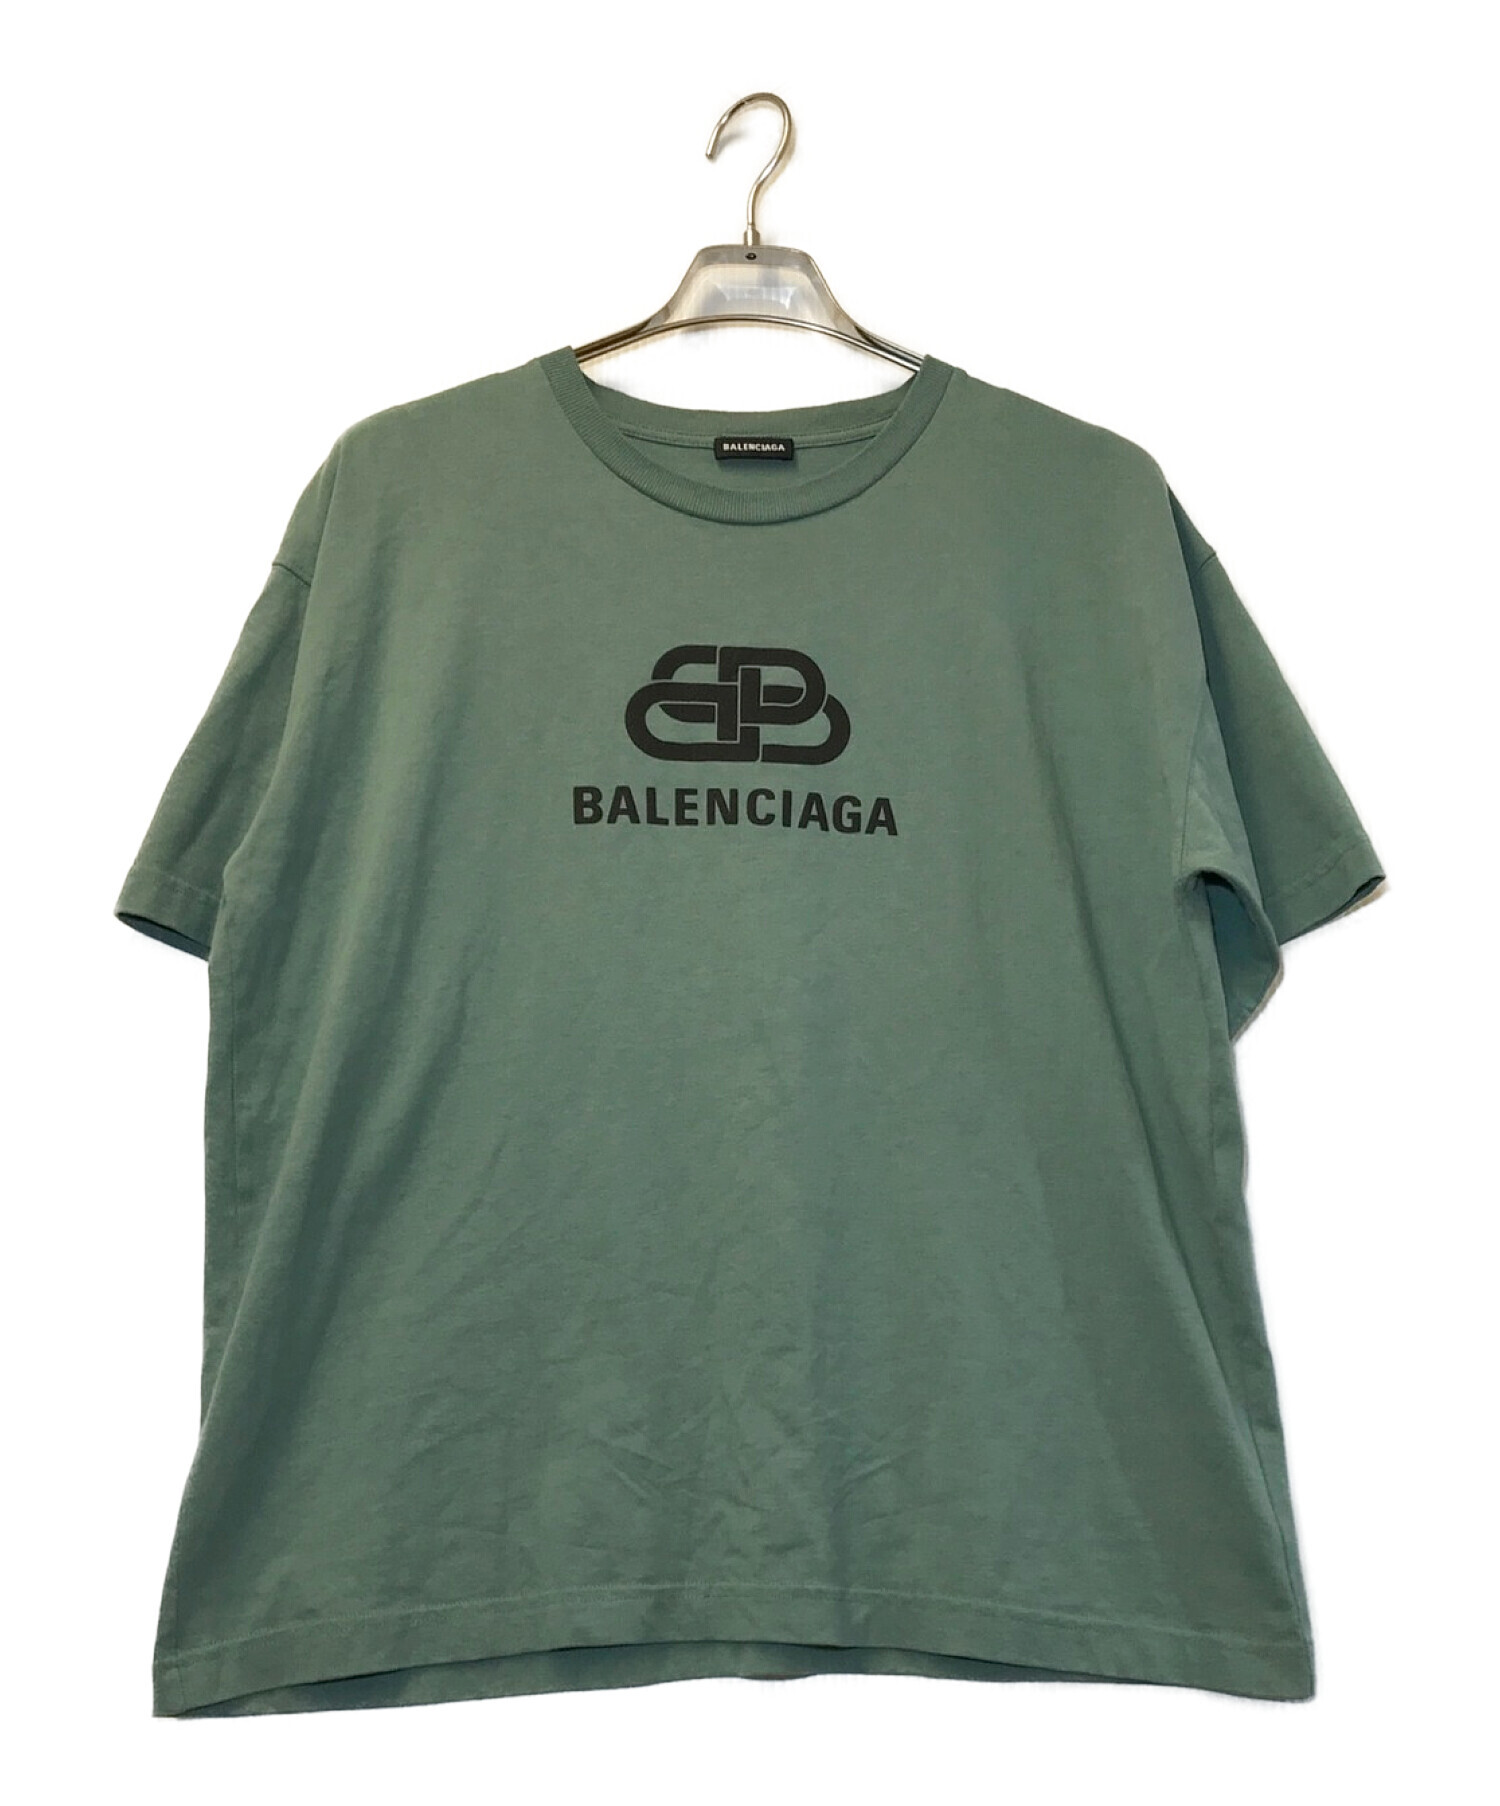 BALENCIAGA バレンシアガ ロゴ 半袖Tシャツ サイズM